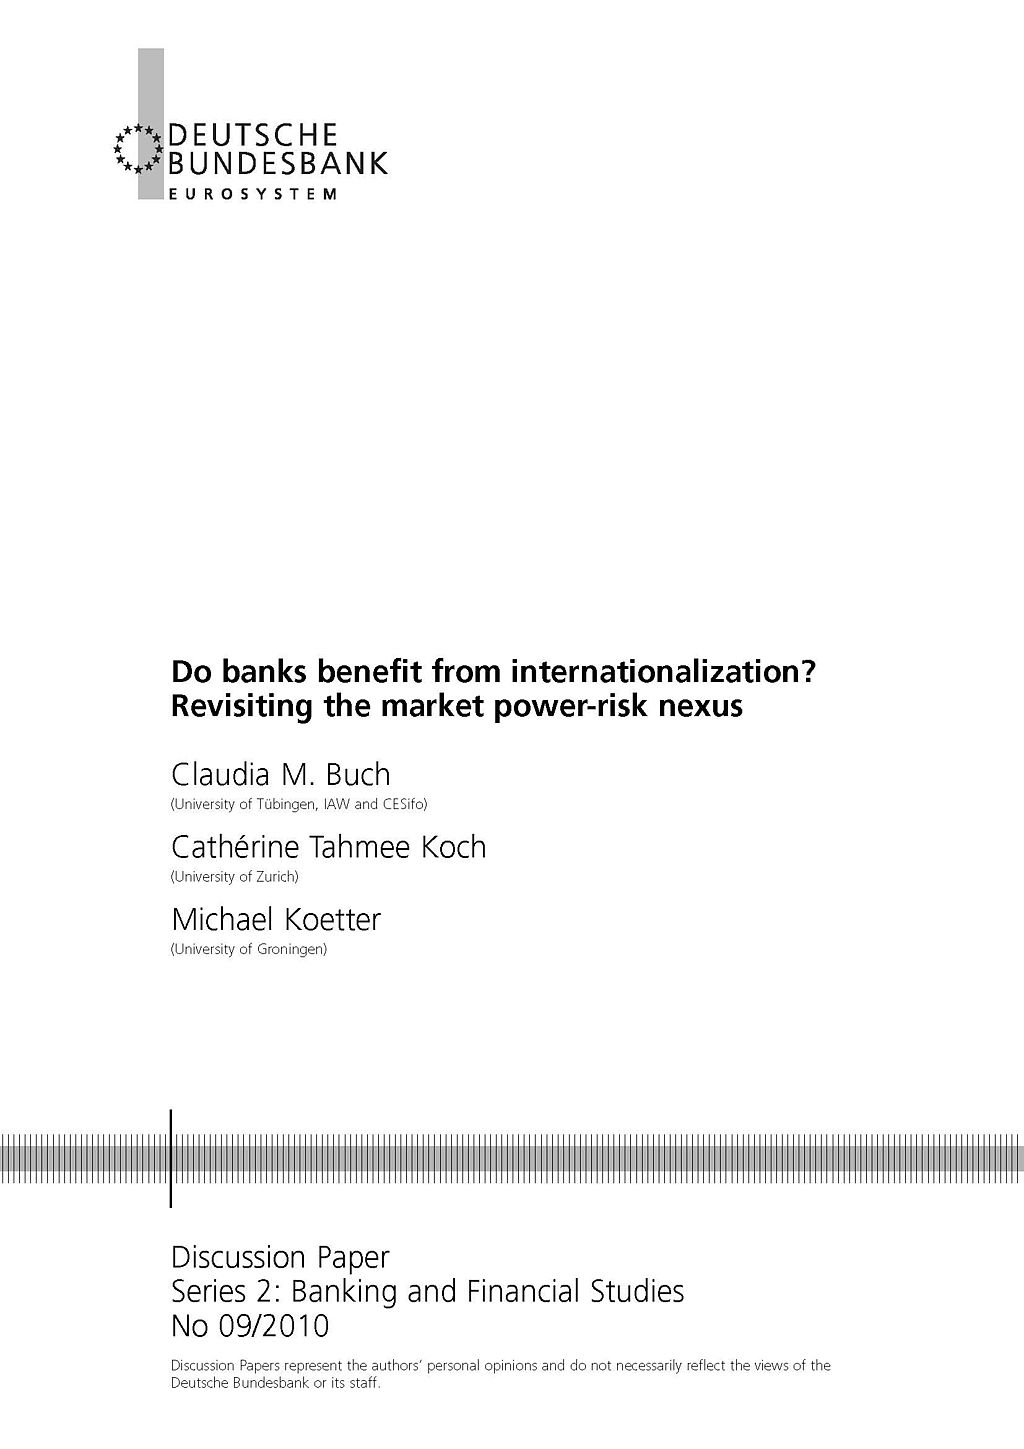 cover_Deutsche-Bundesbank-Discussion-Paper_2010-09.jpg